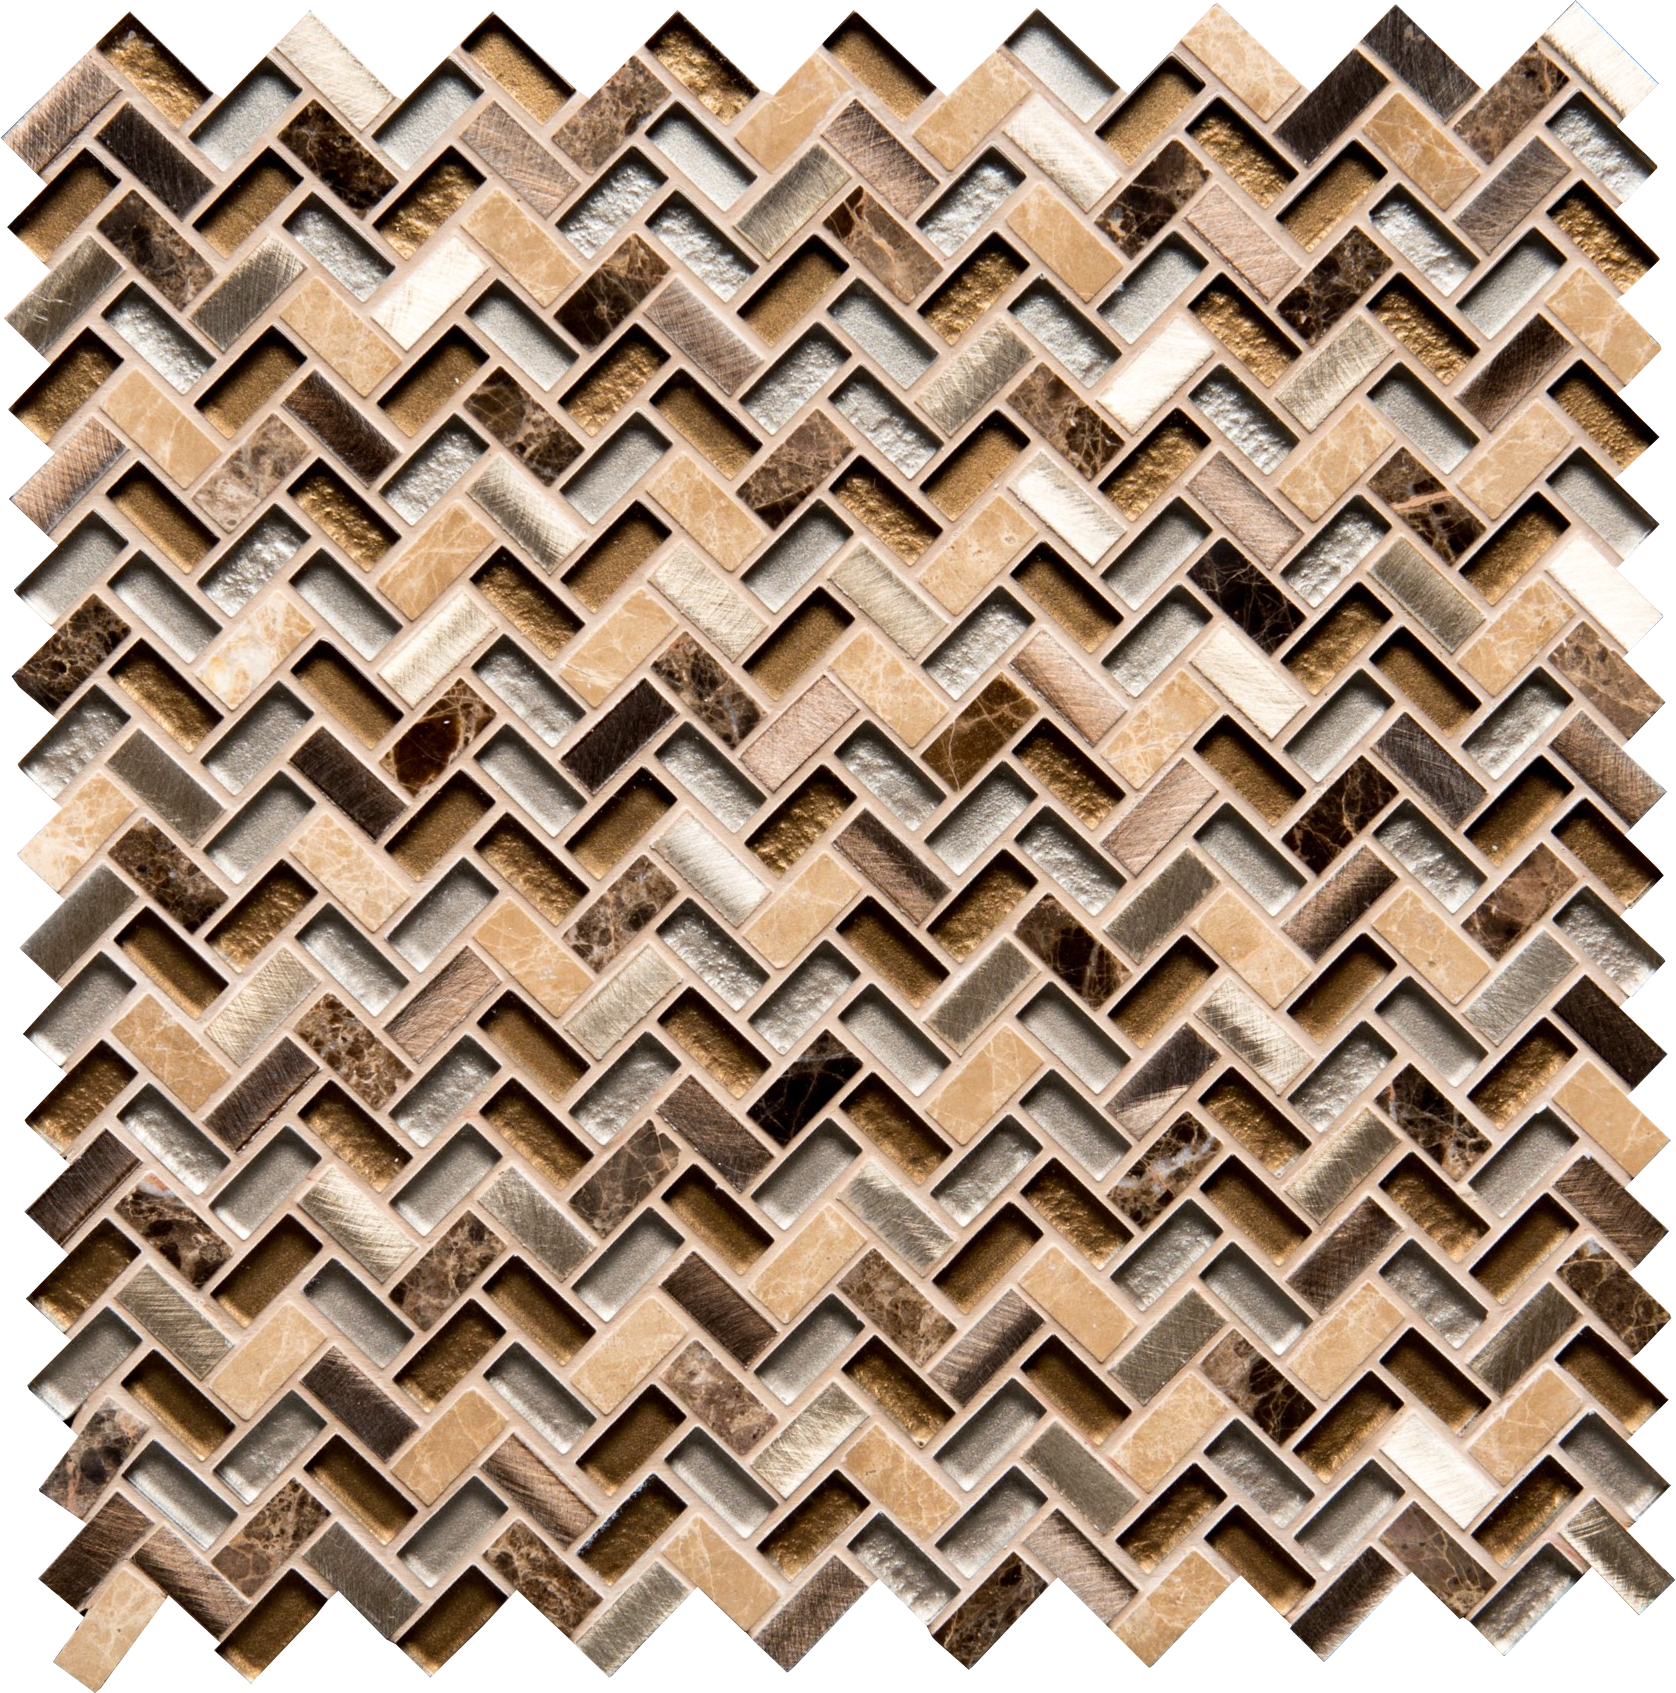 A Close Up Of A Tile